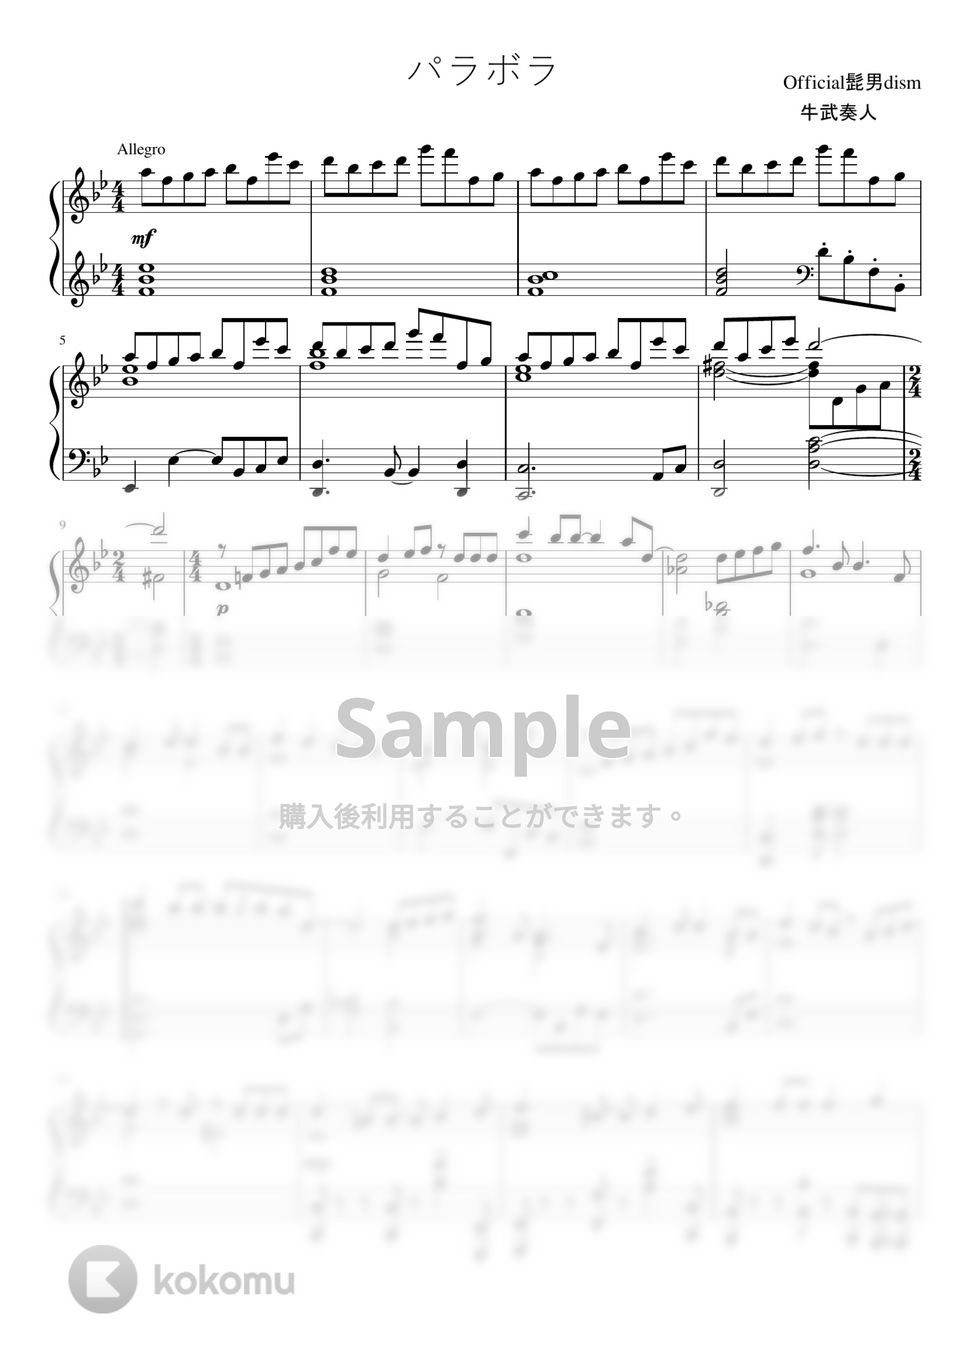 Official髭男dism - パラボラ (上級・ピアノソロ) by 牛武奏人